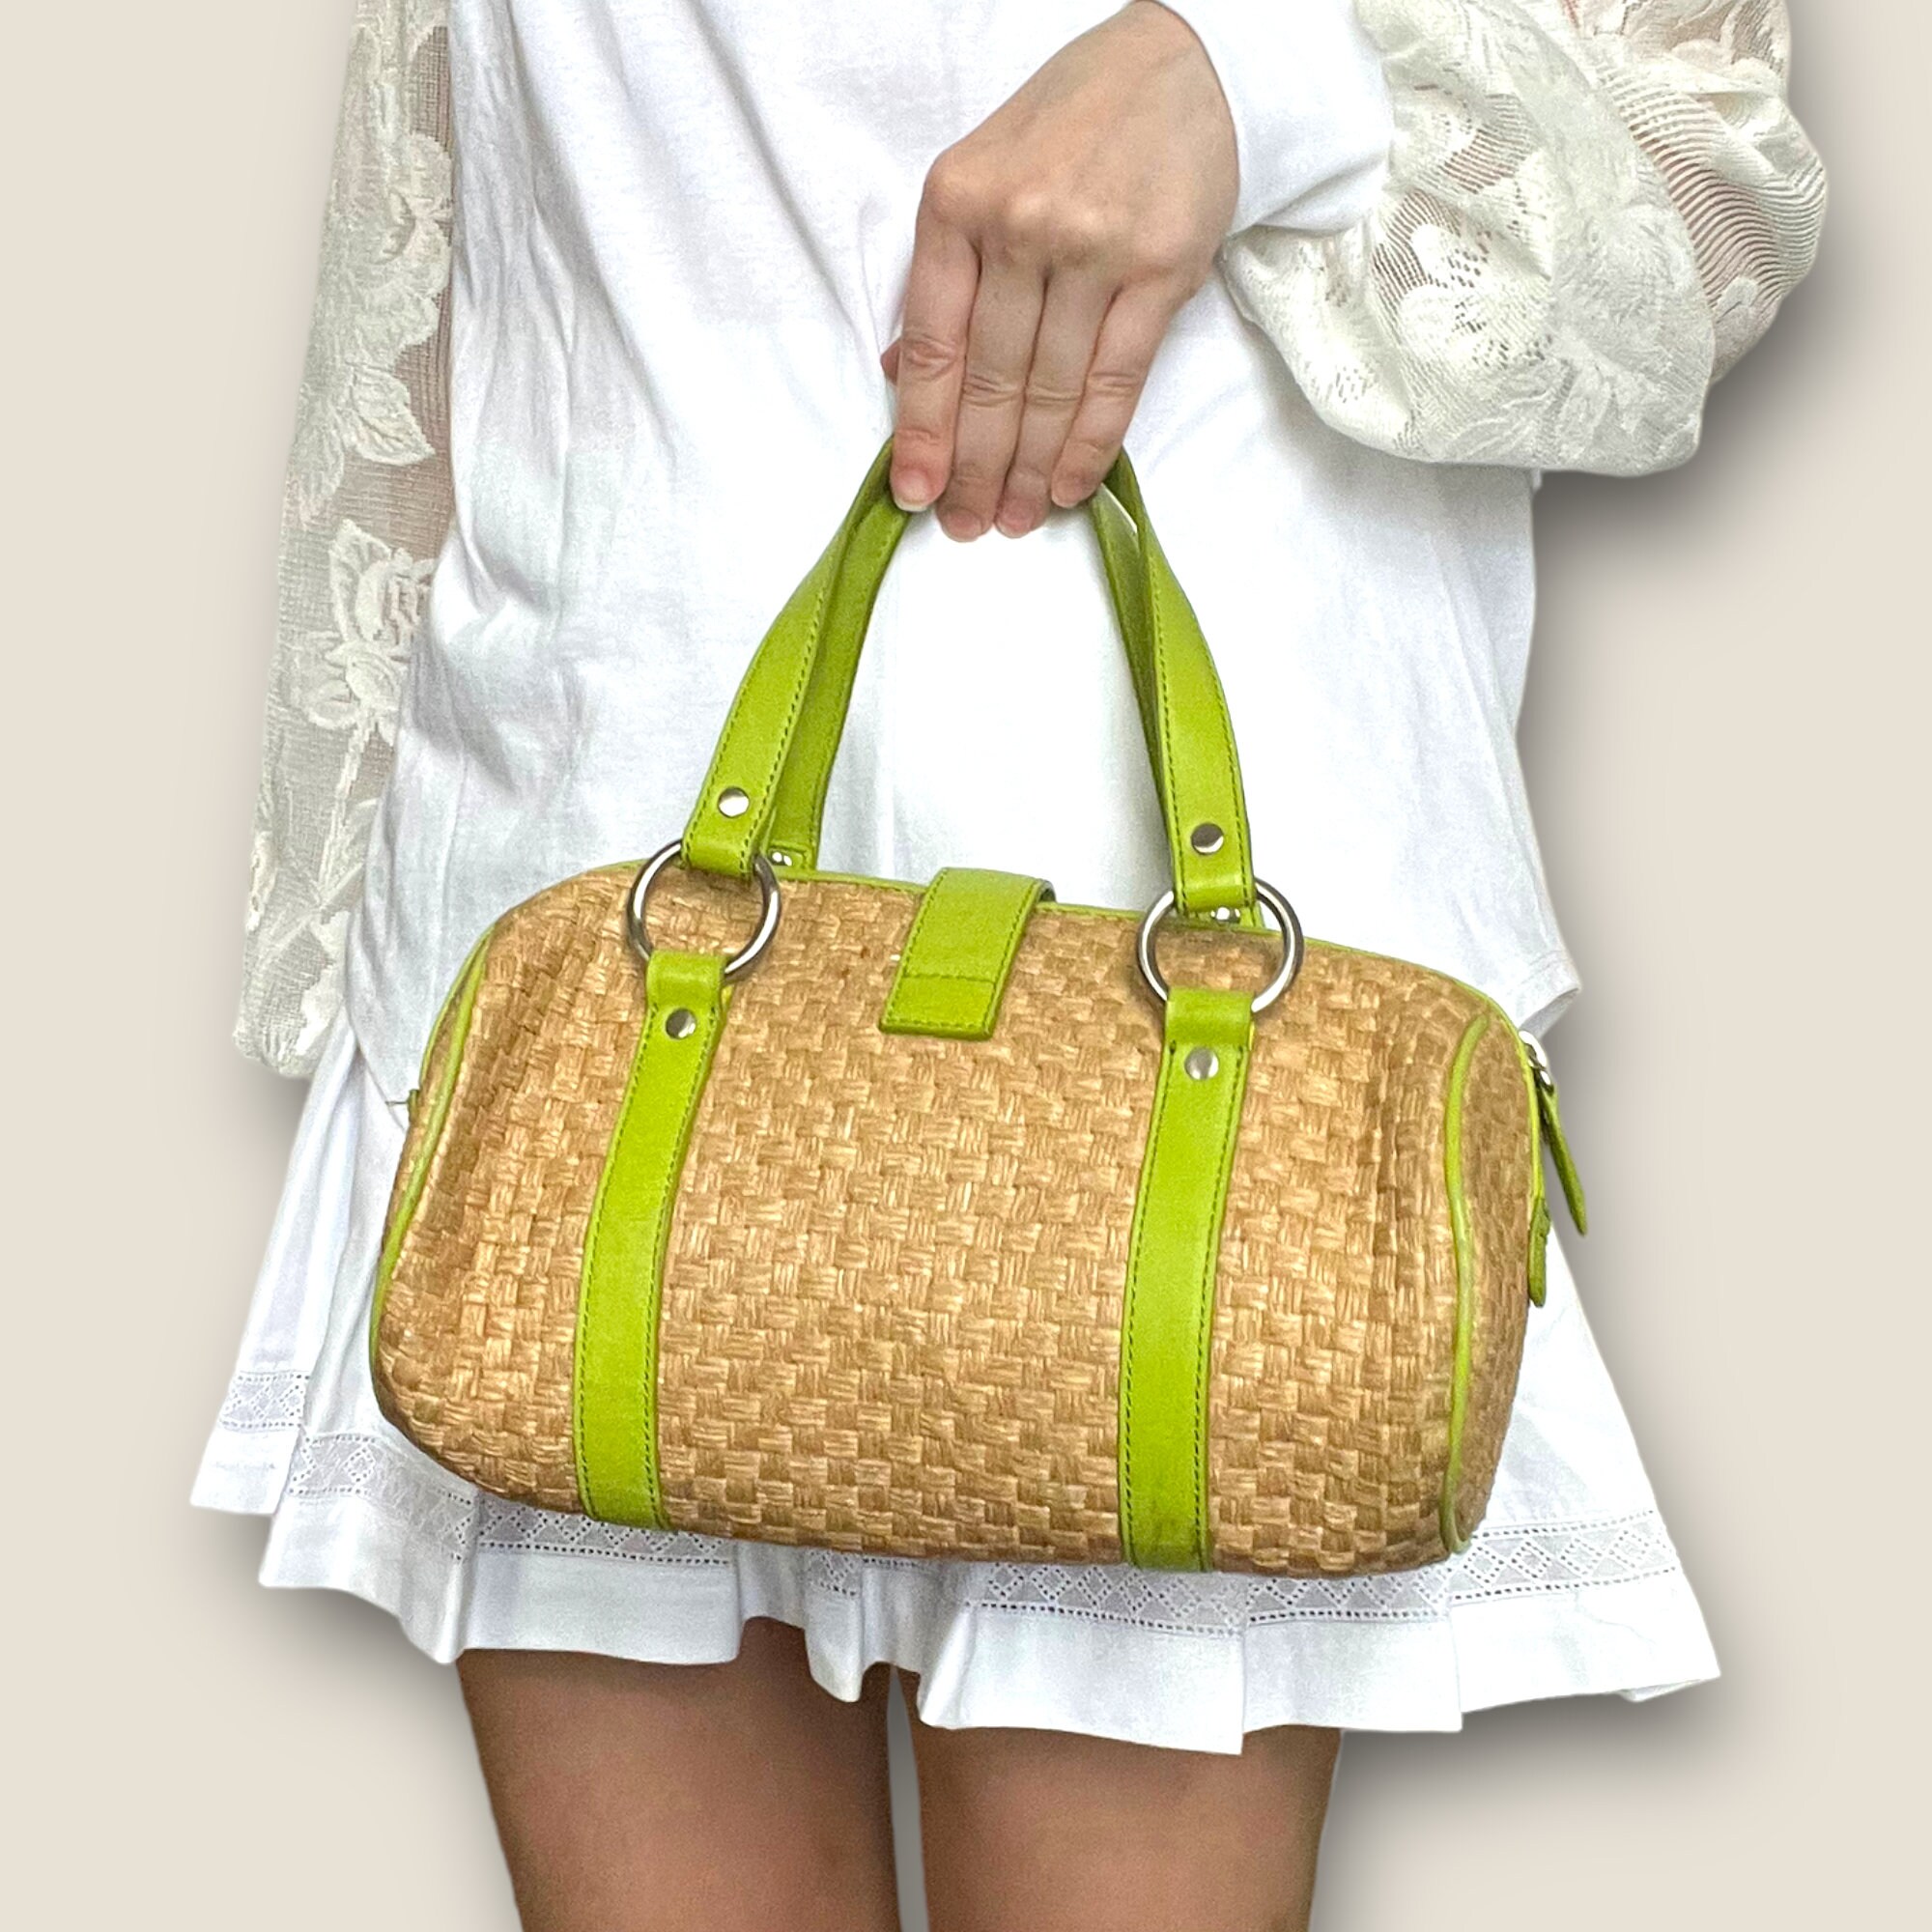 PRESTON AND YORK Purse Handbag White Pebbled Leather Zip Closure Top | eBay